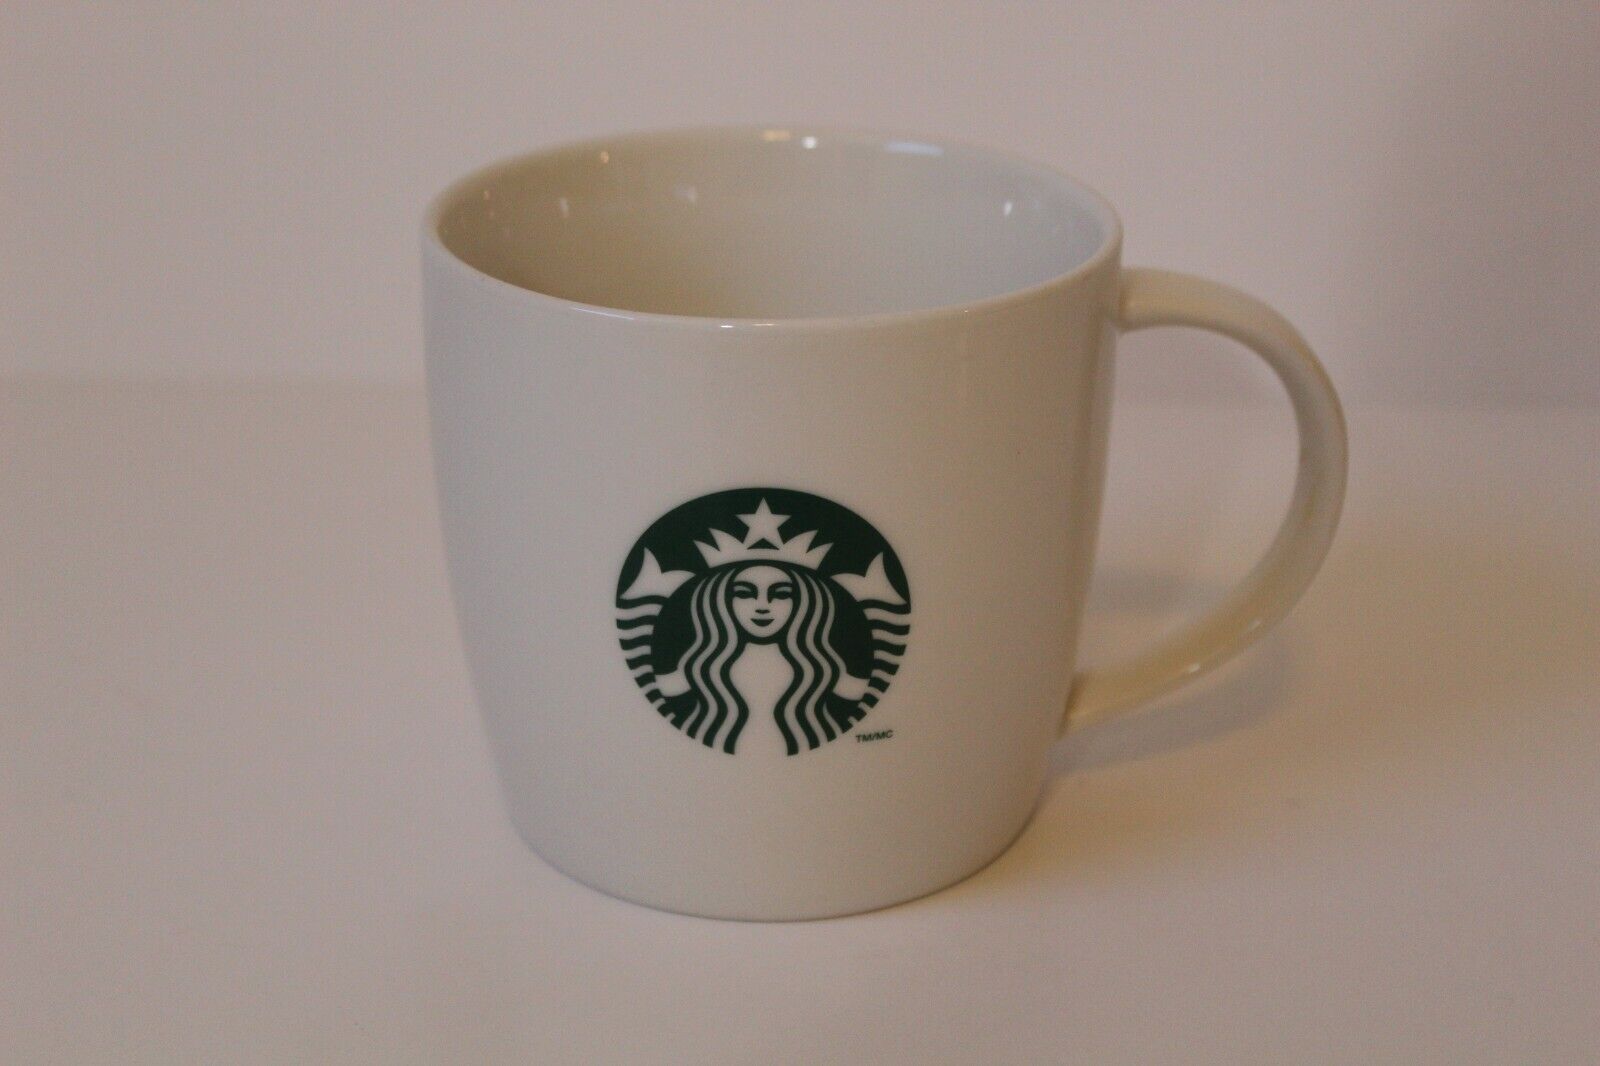 2013 Starbucks 12 oz Green Siren Ceramic Coffee Mug Cup